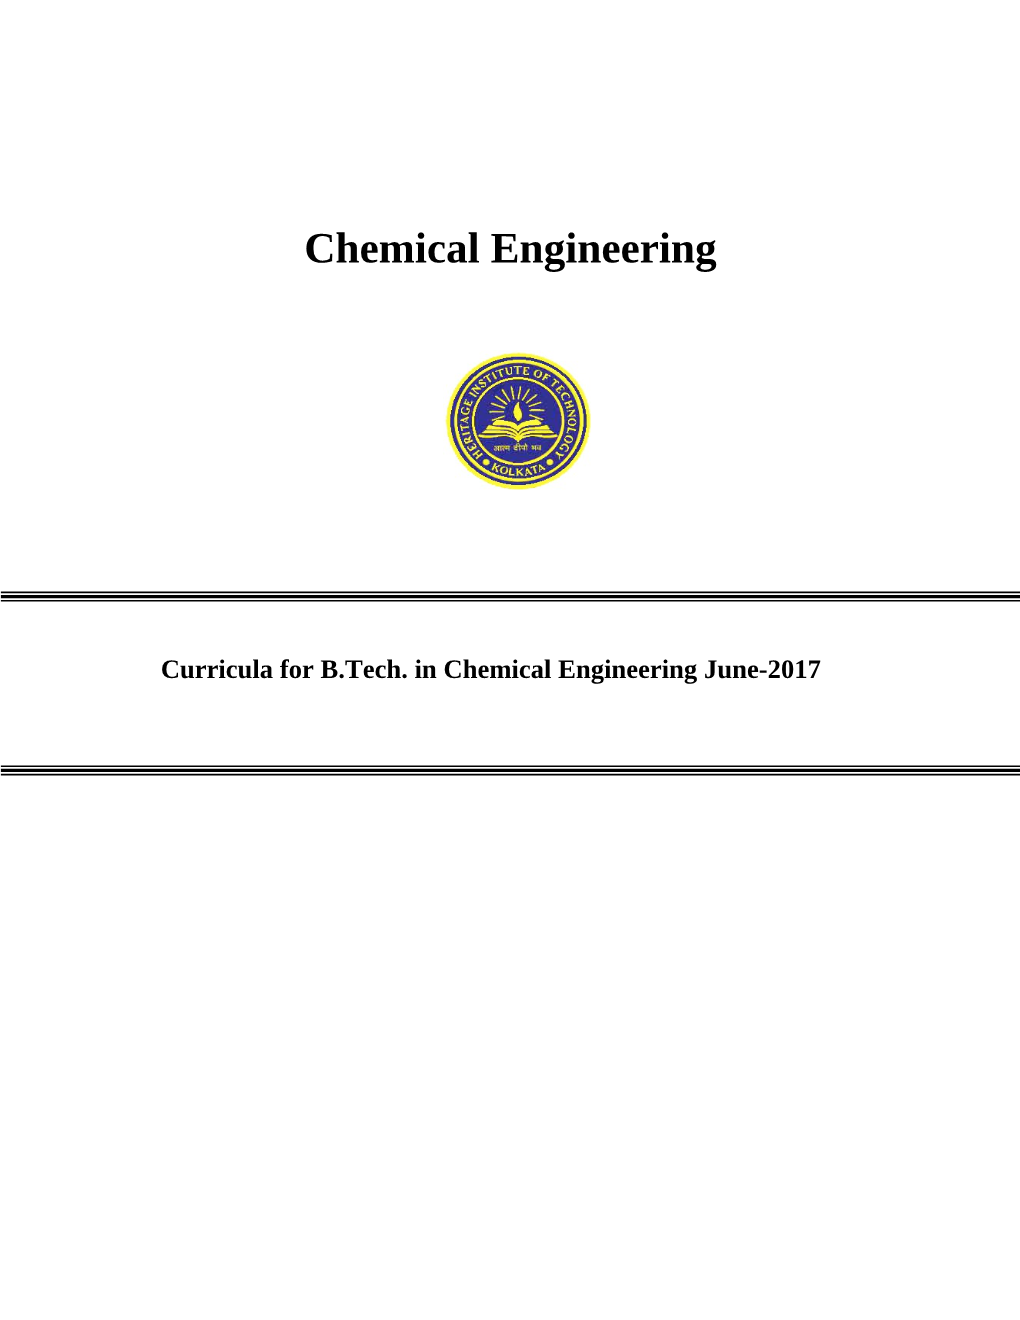 B. Tech Chemical Engineering